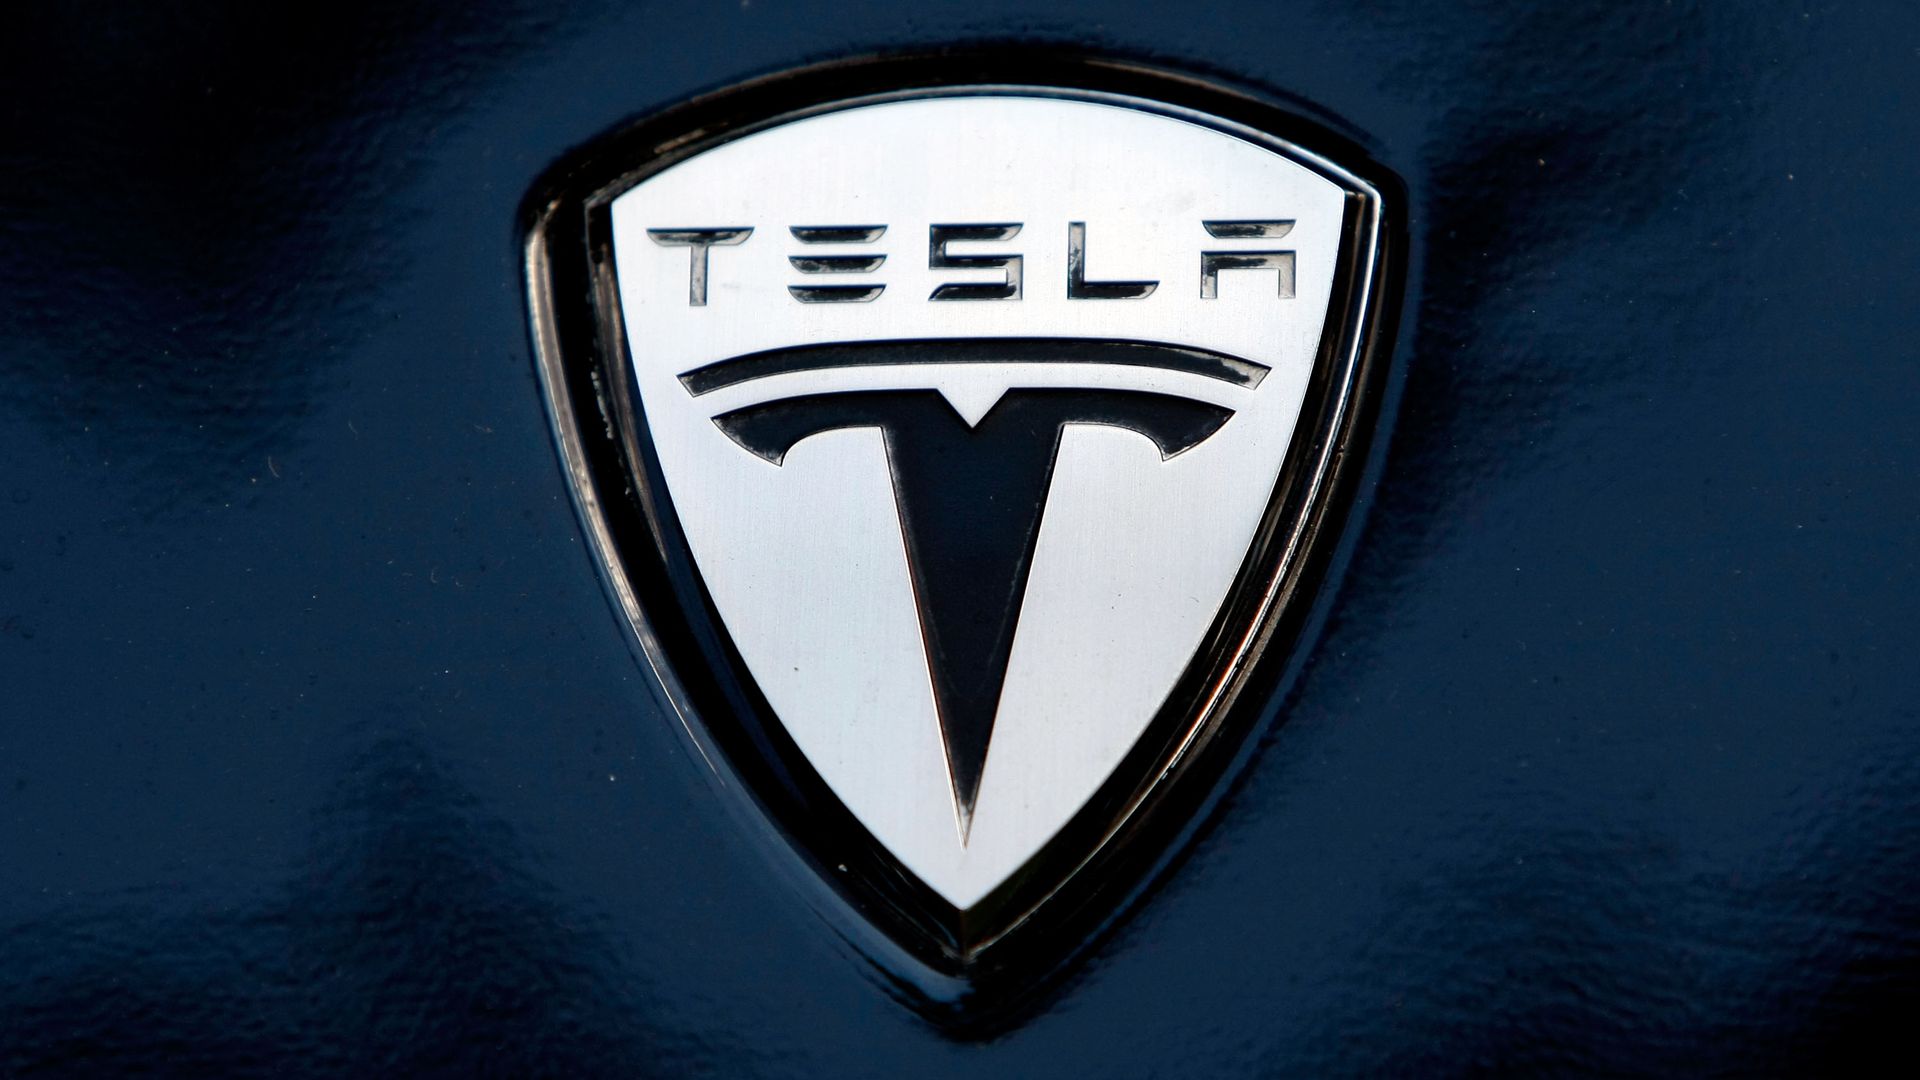 Photo of Tesla's electric car logo